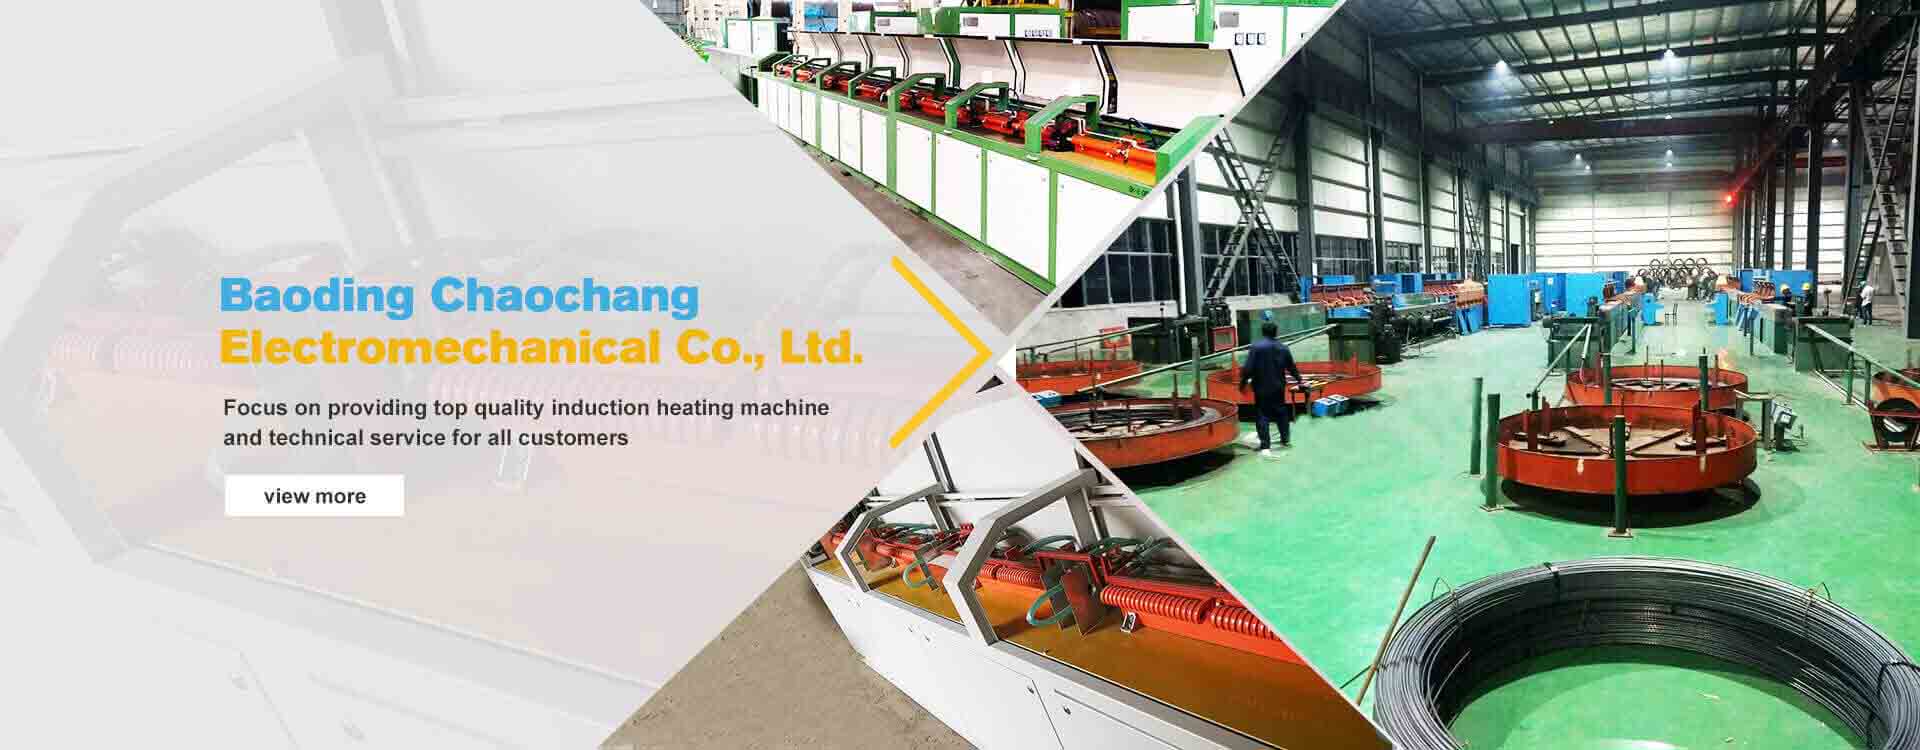 Baoding Chaochang Electromechanical Co., Ltd.